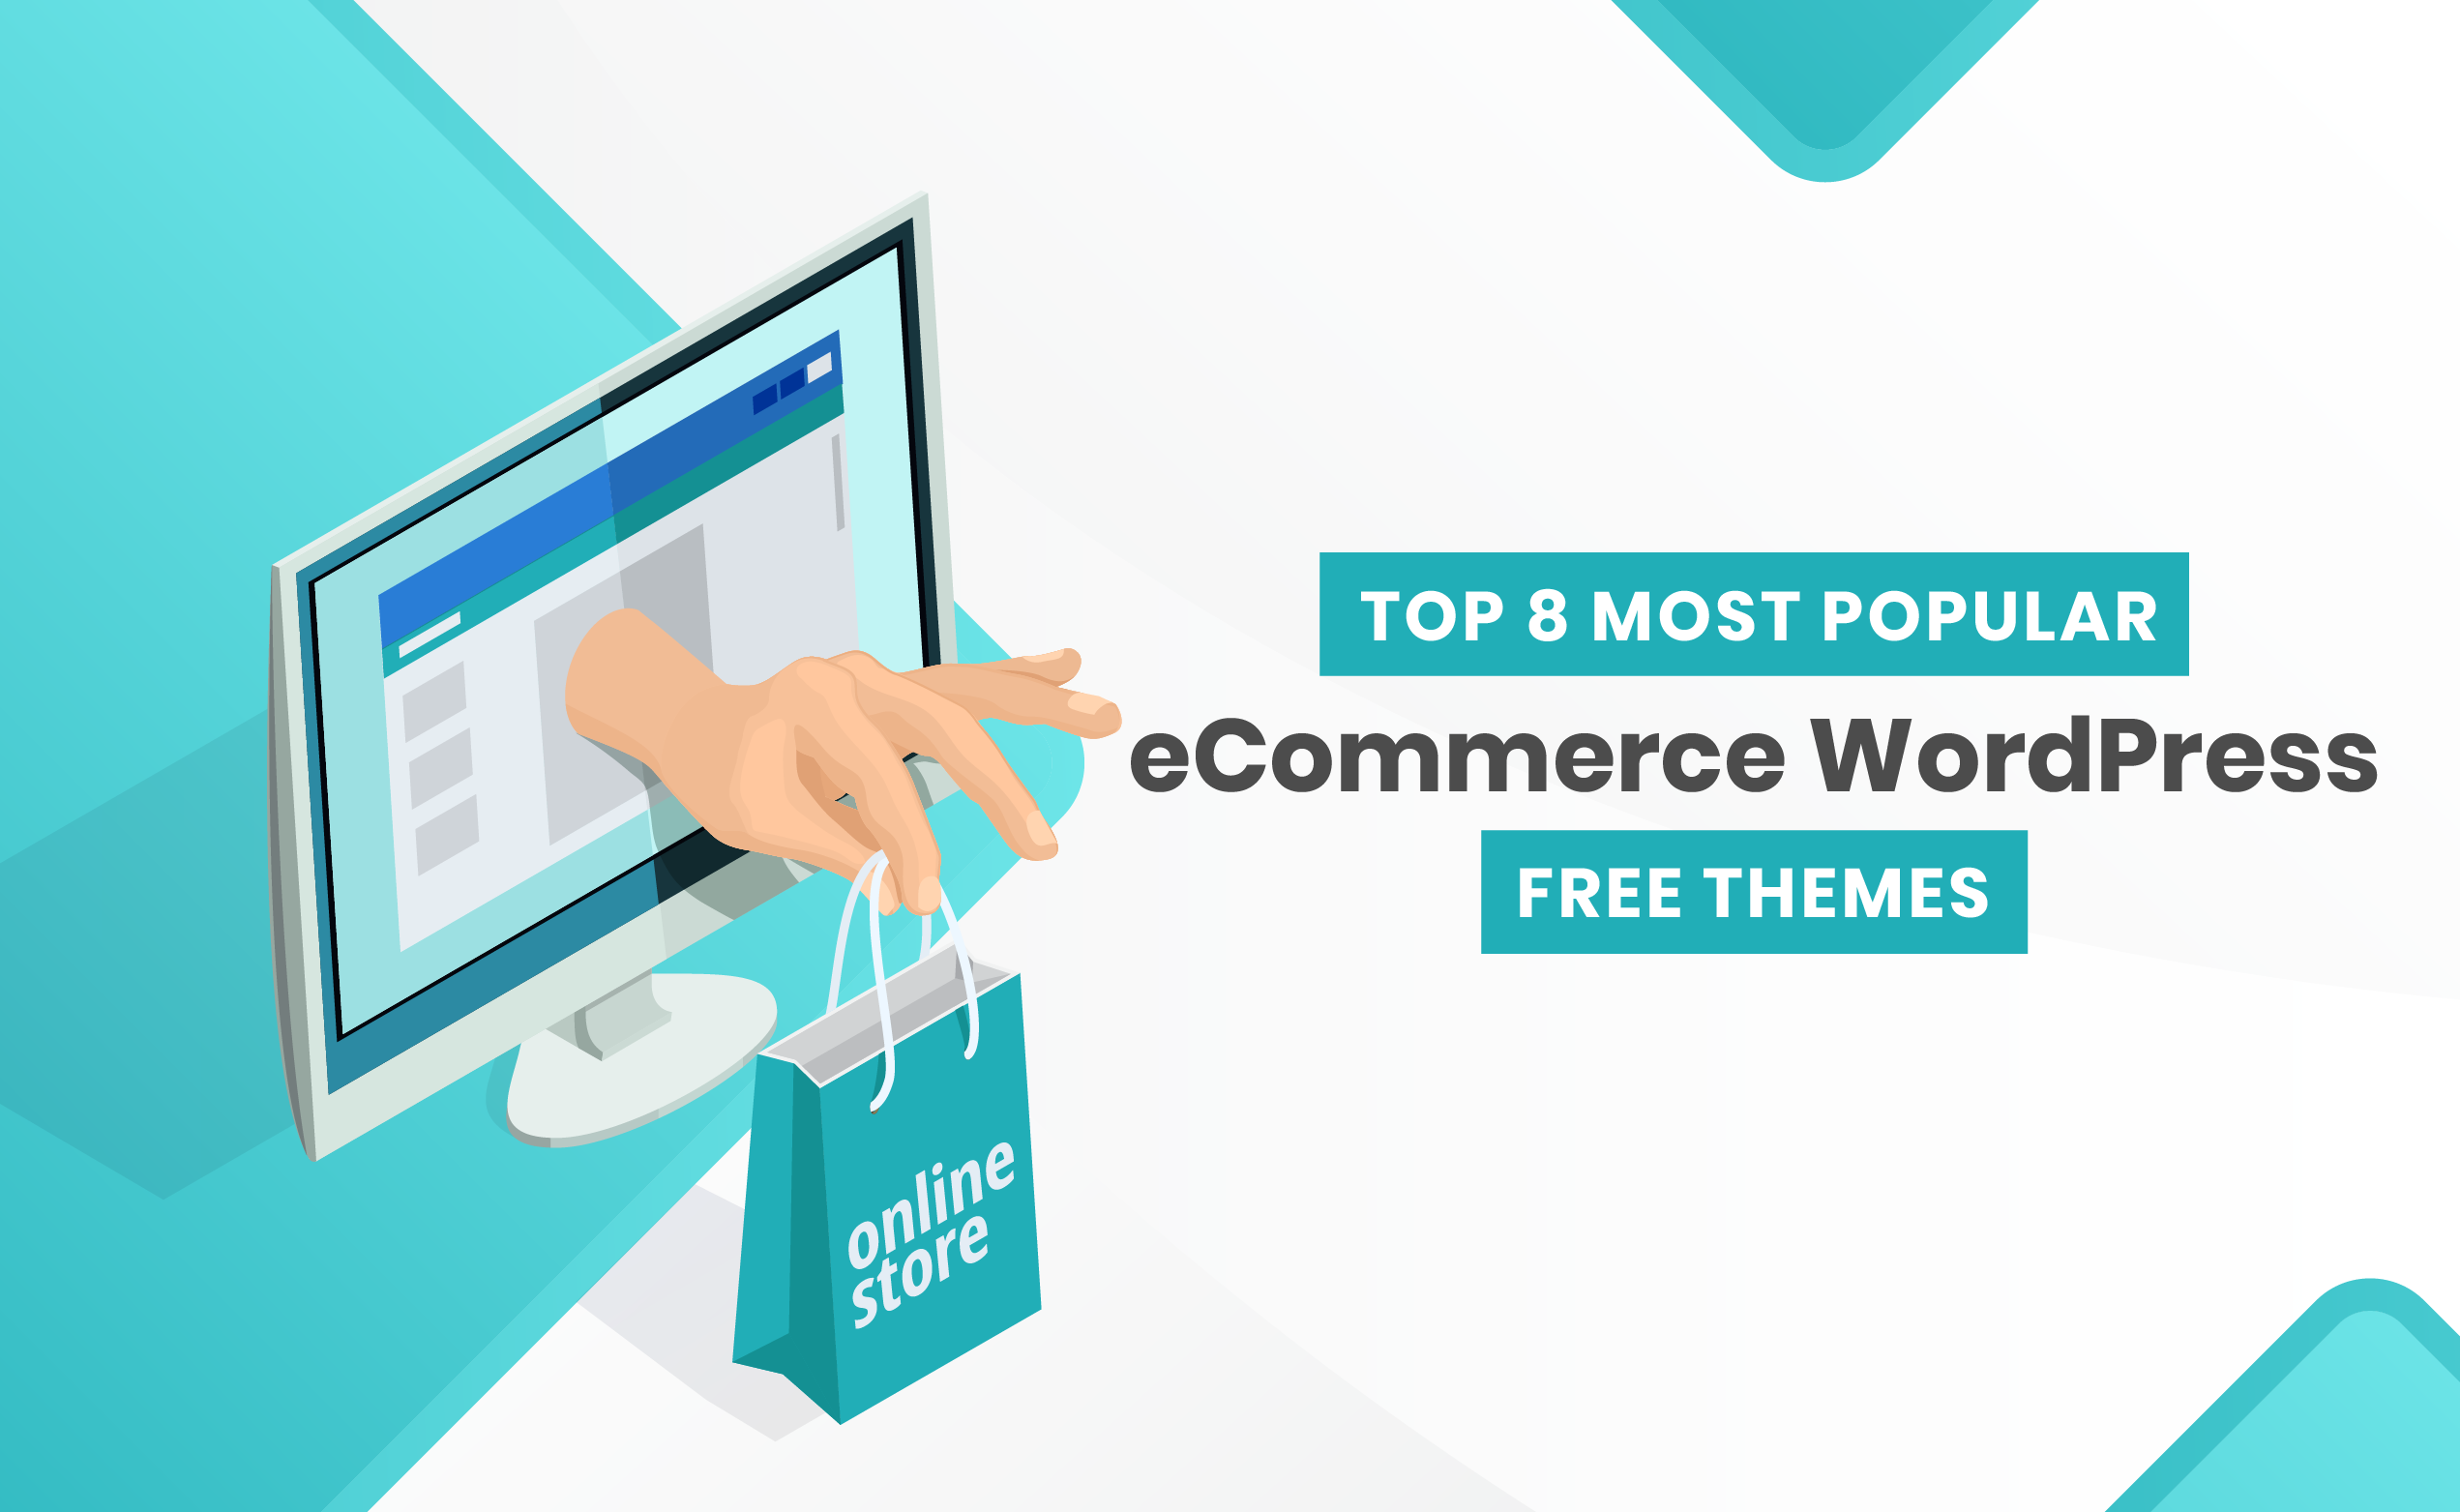 Popular eCommerce WordPress Free Themes